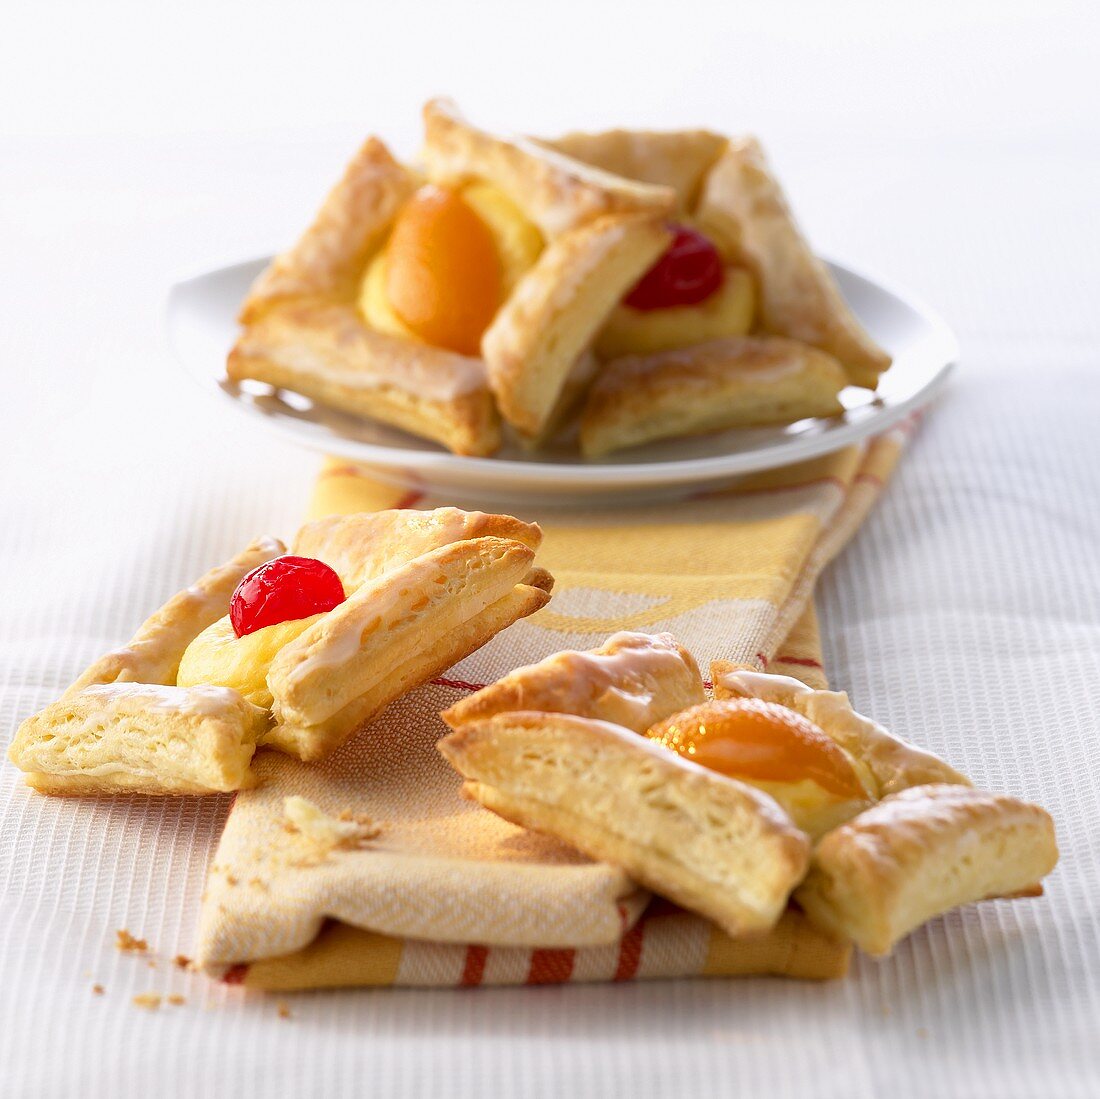 Danish pastries with peaches and cherries